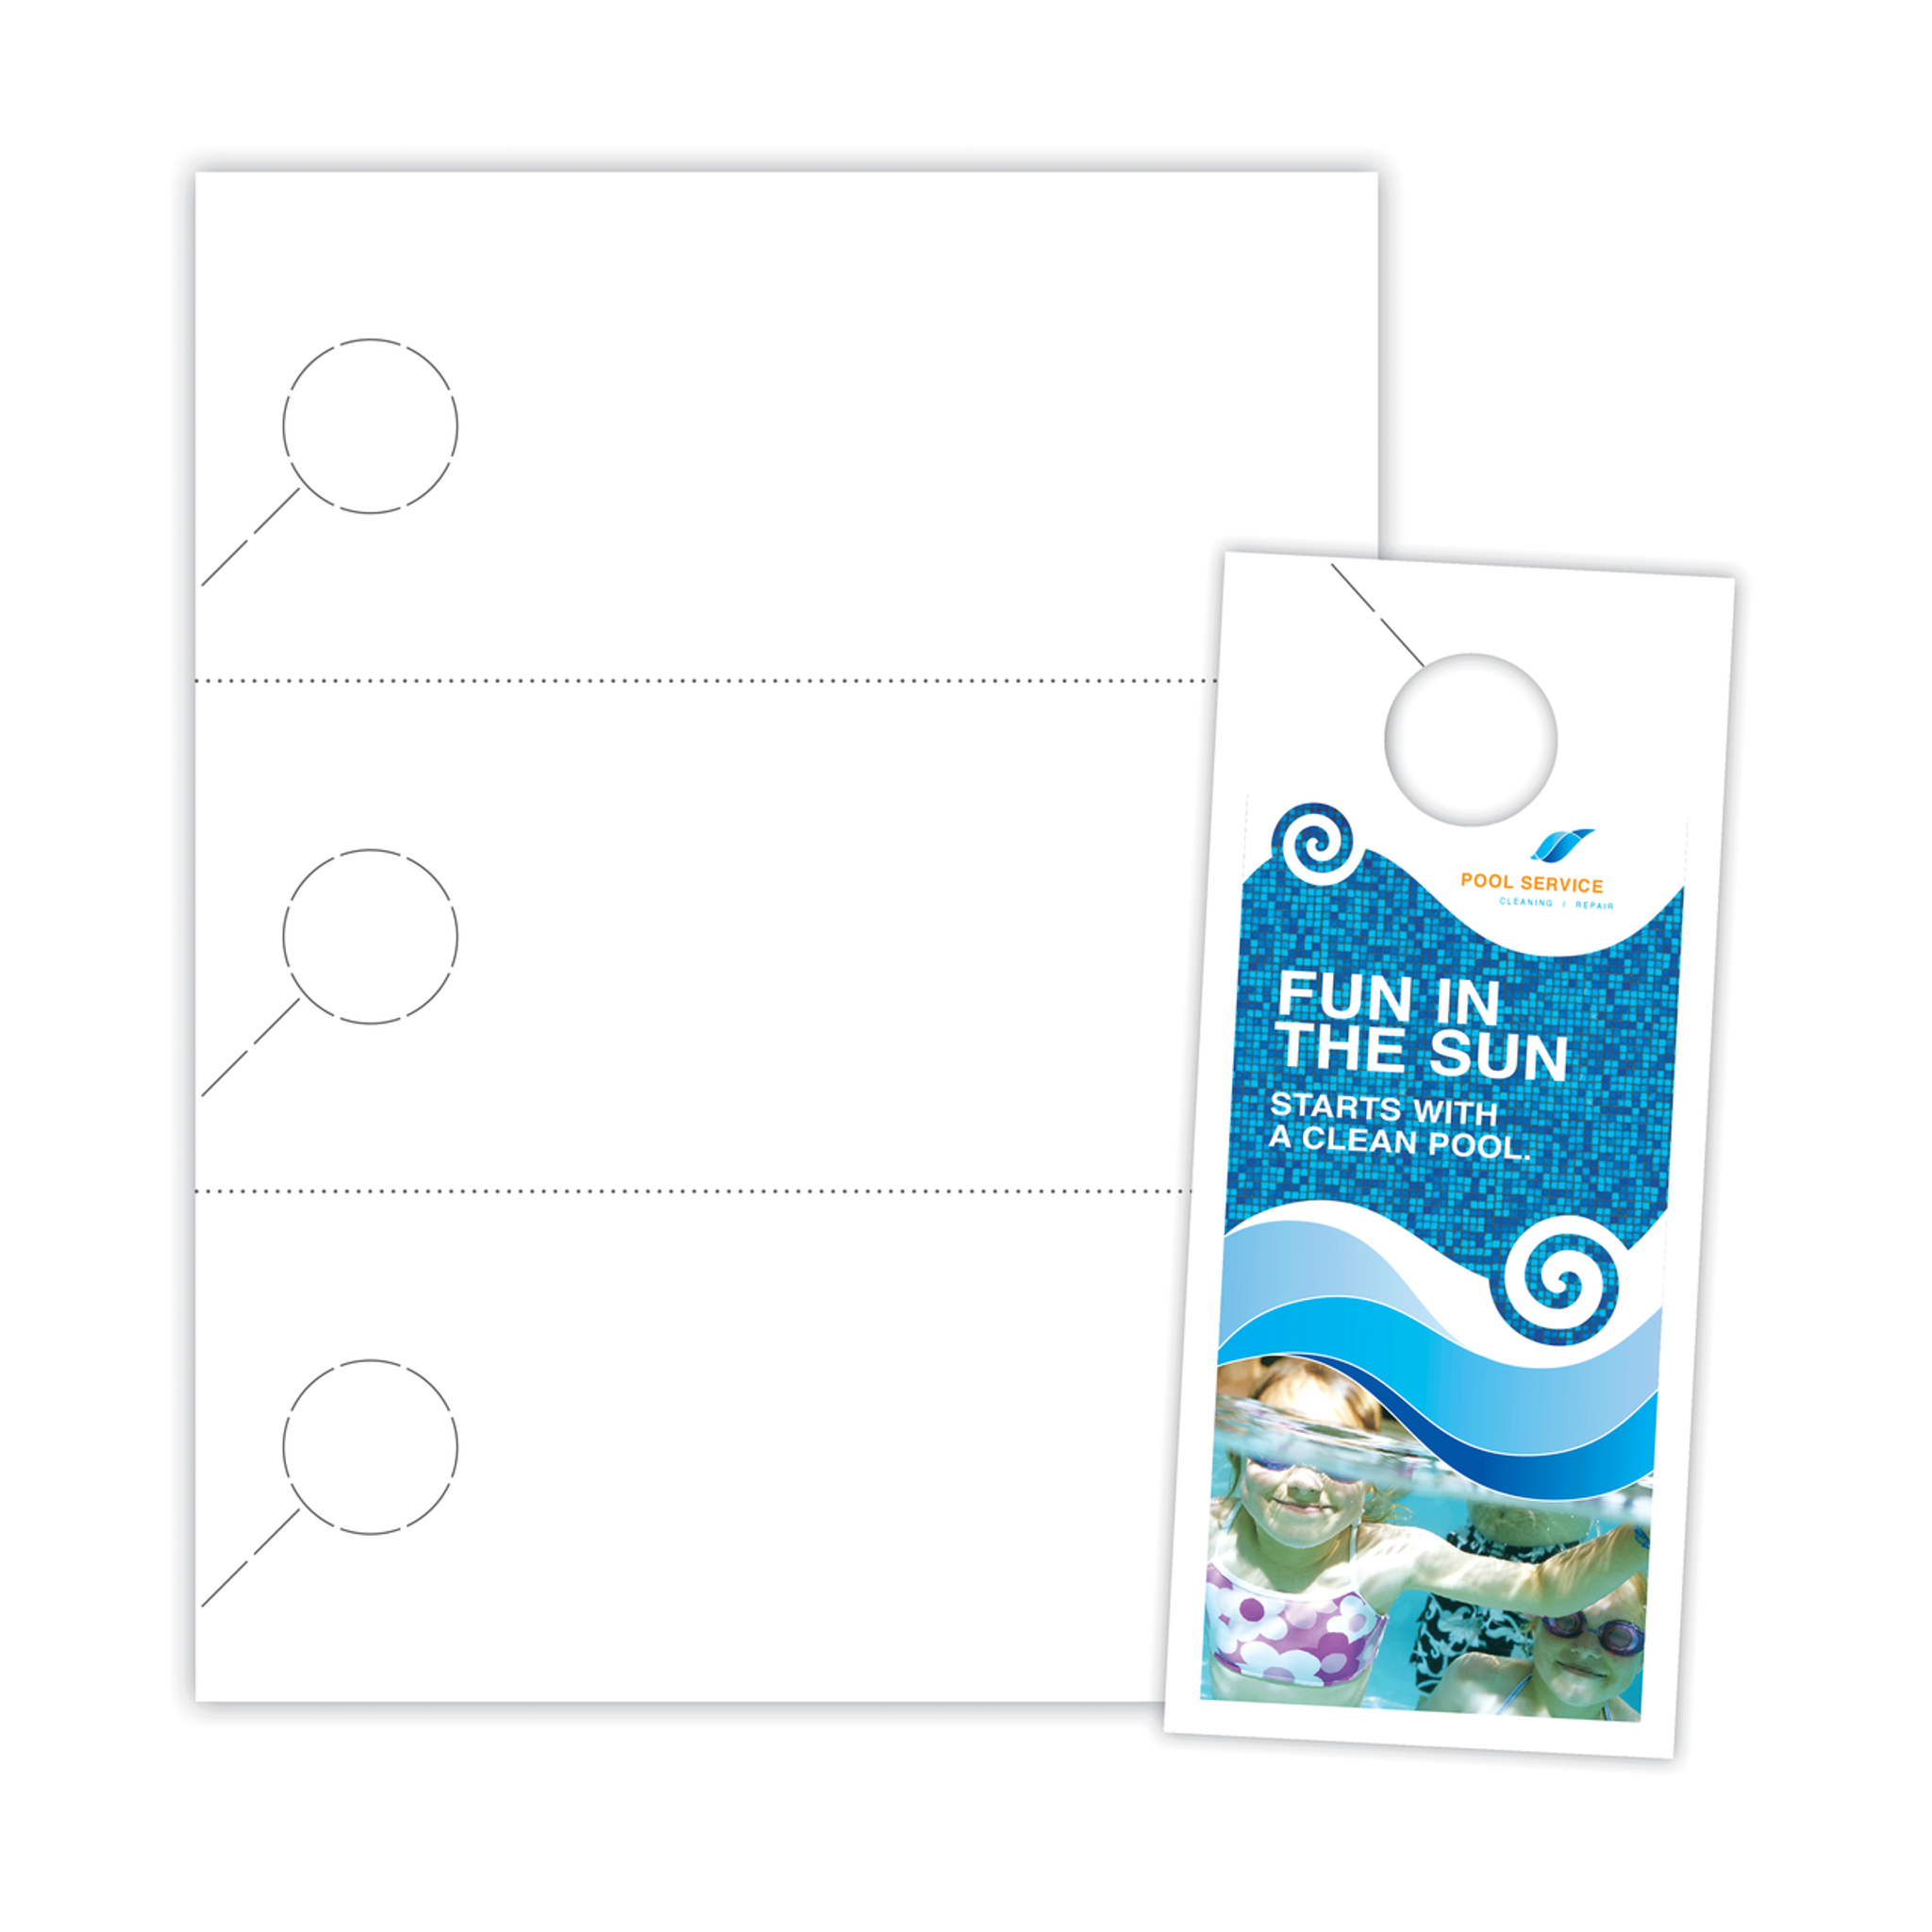 Craftables Waterproof Inkjet Sticker Paper - 10 Sheets Printable Vinyl - Inkjet (Matte White)